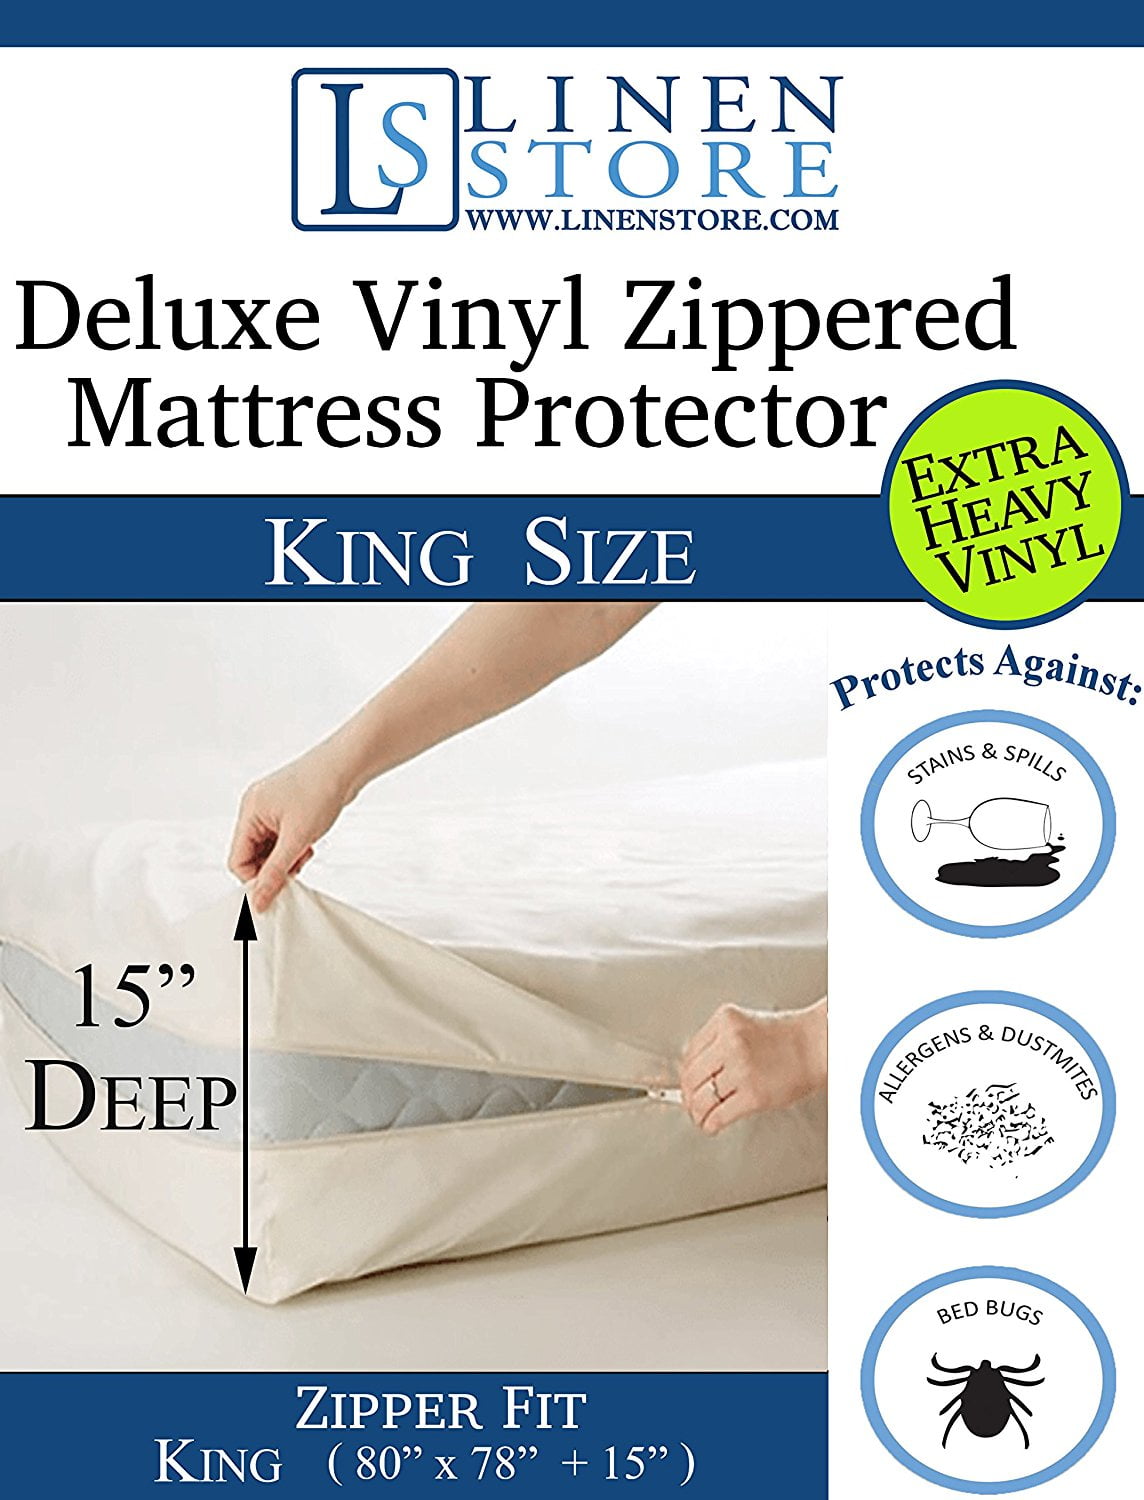 Zippered Allergy Relief Bed Bug Waterproof Vinyl Mattress Cover Protector 